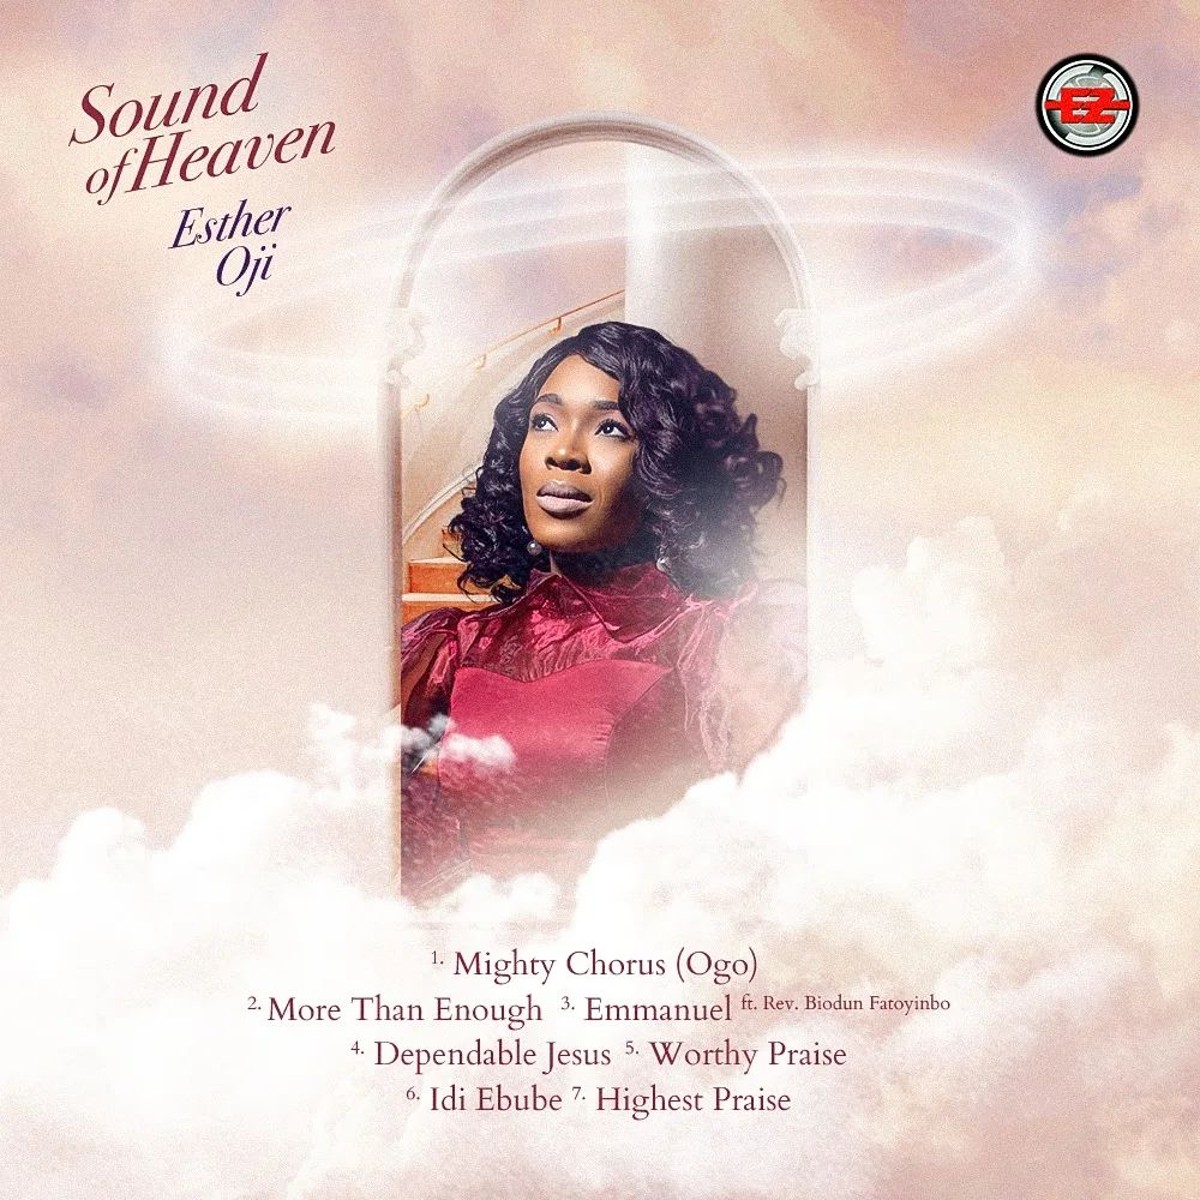 Sound Of Heaven by Esther Oji | Album